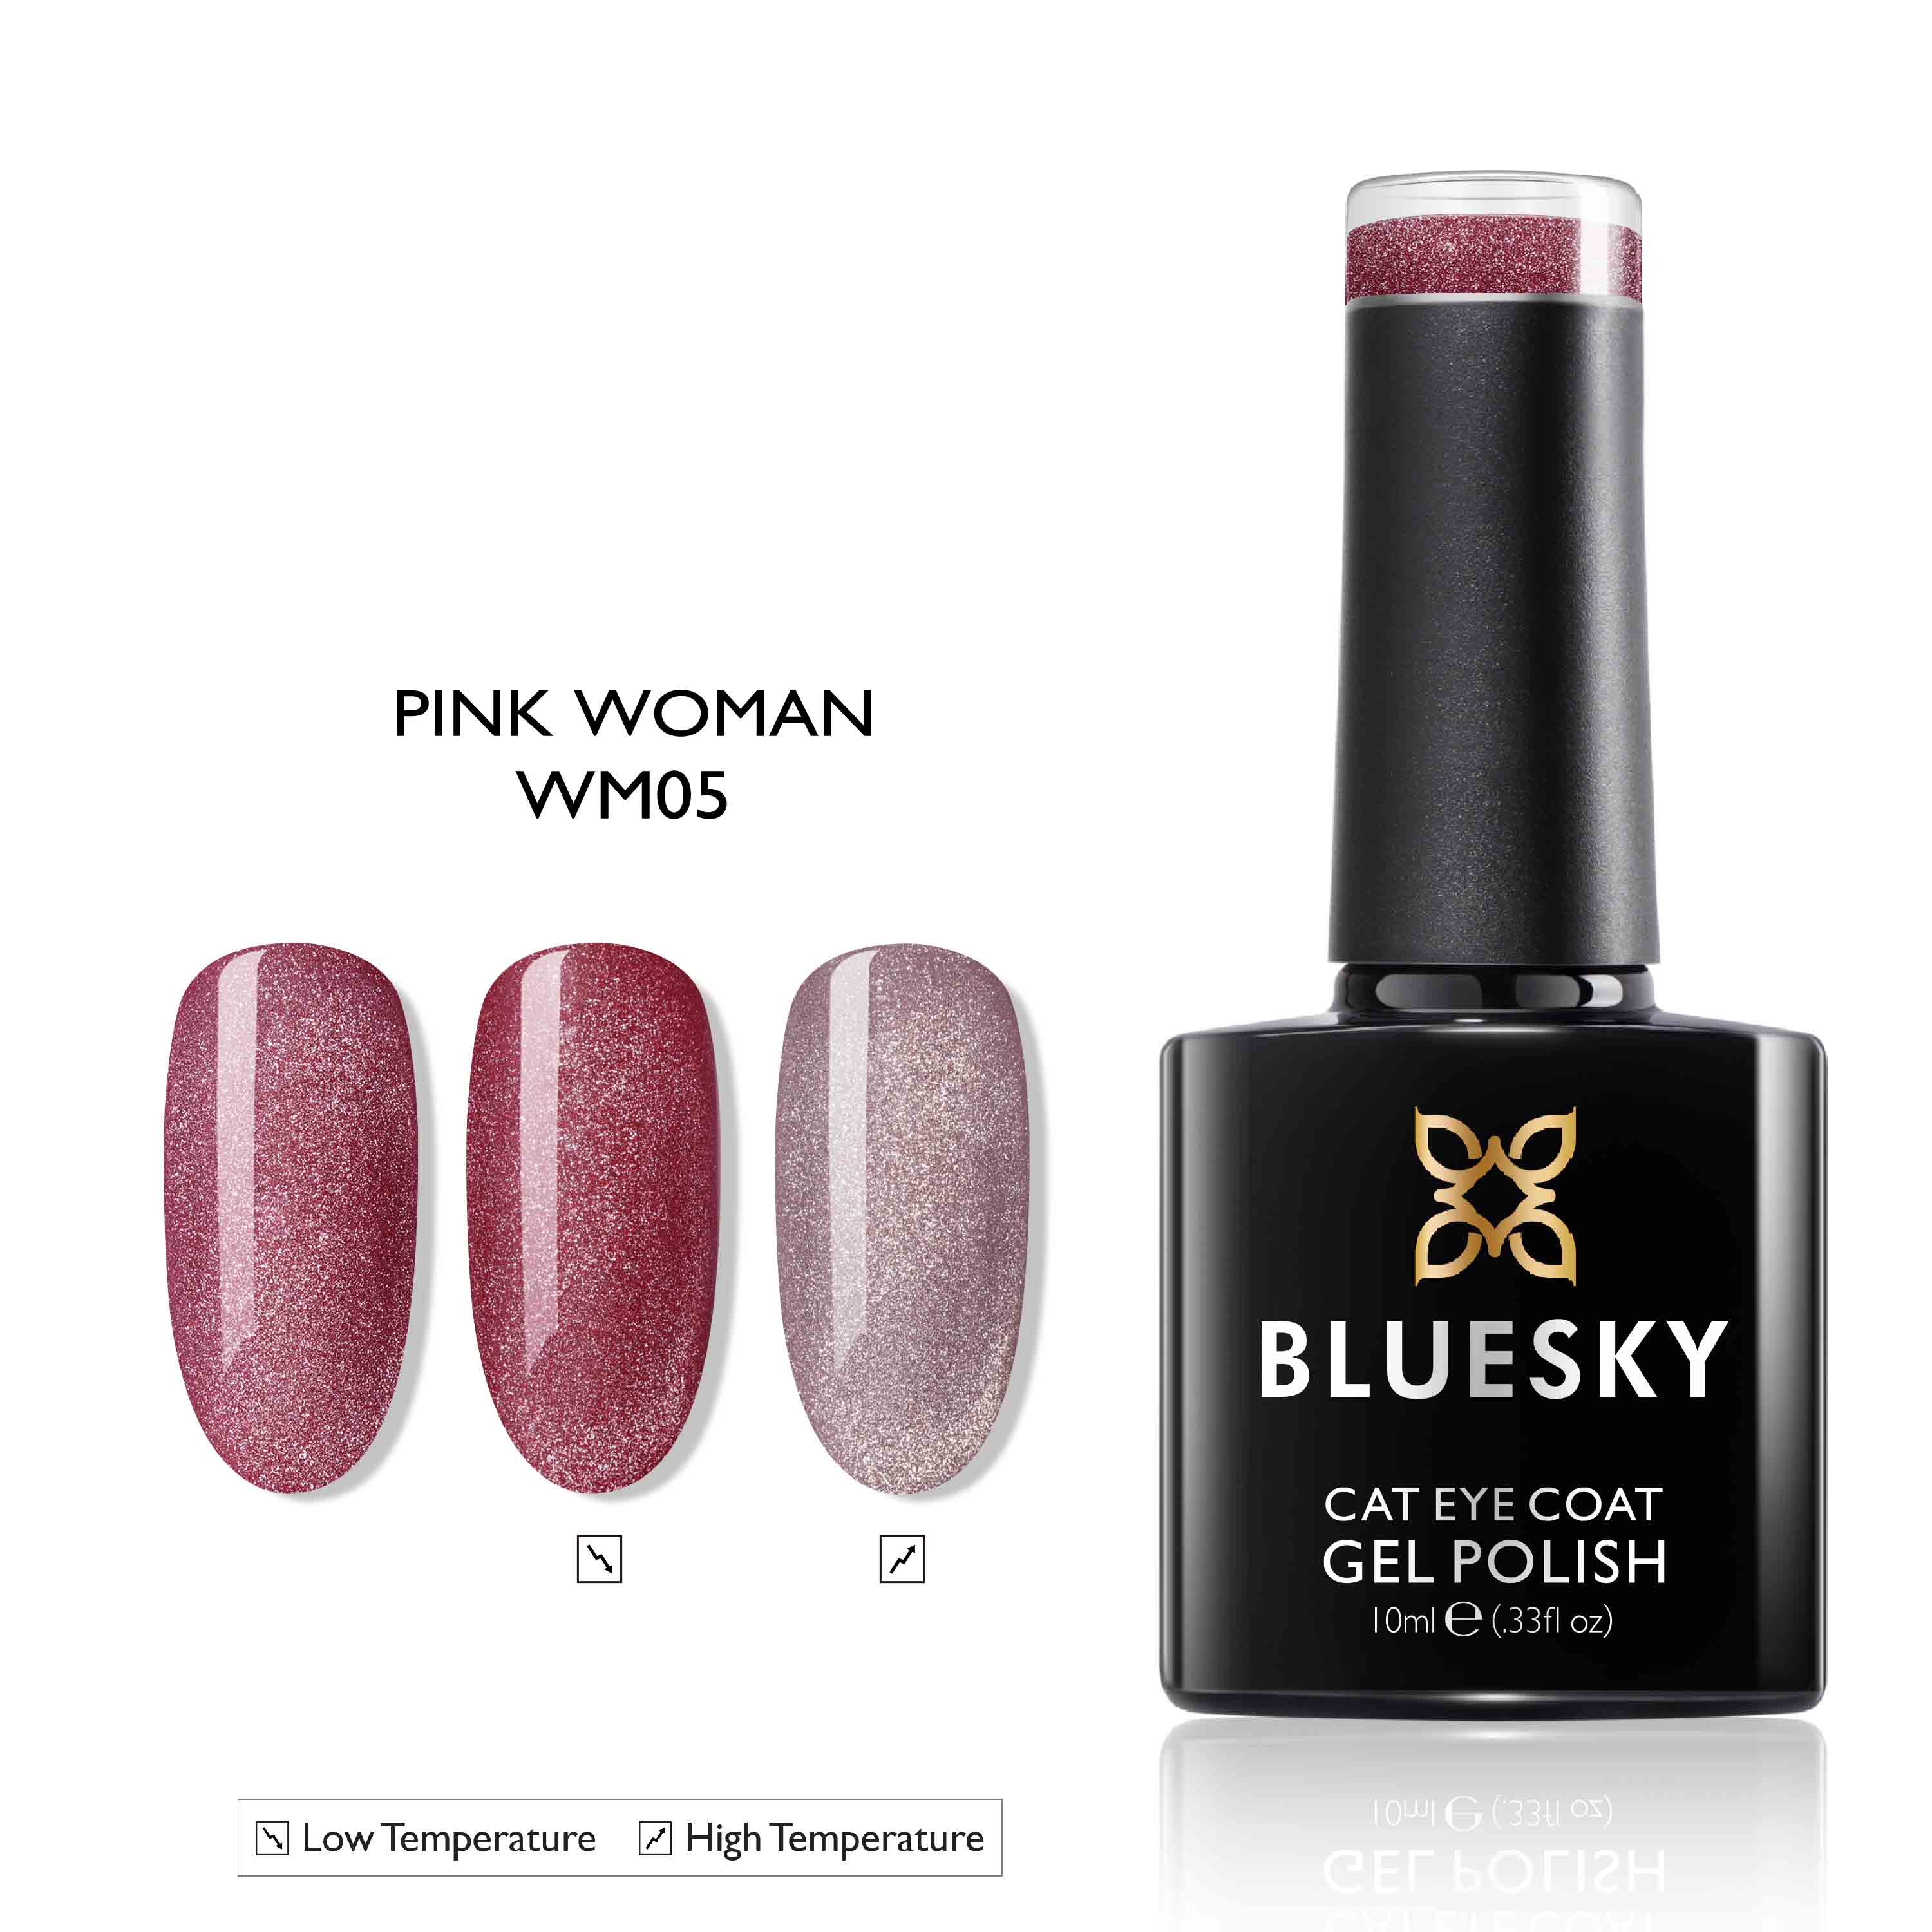 Pink woman - BLUESKY